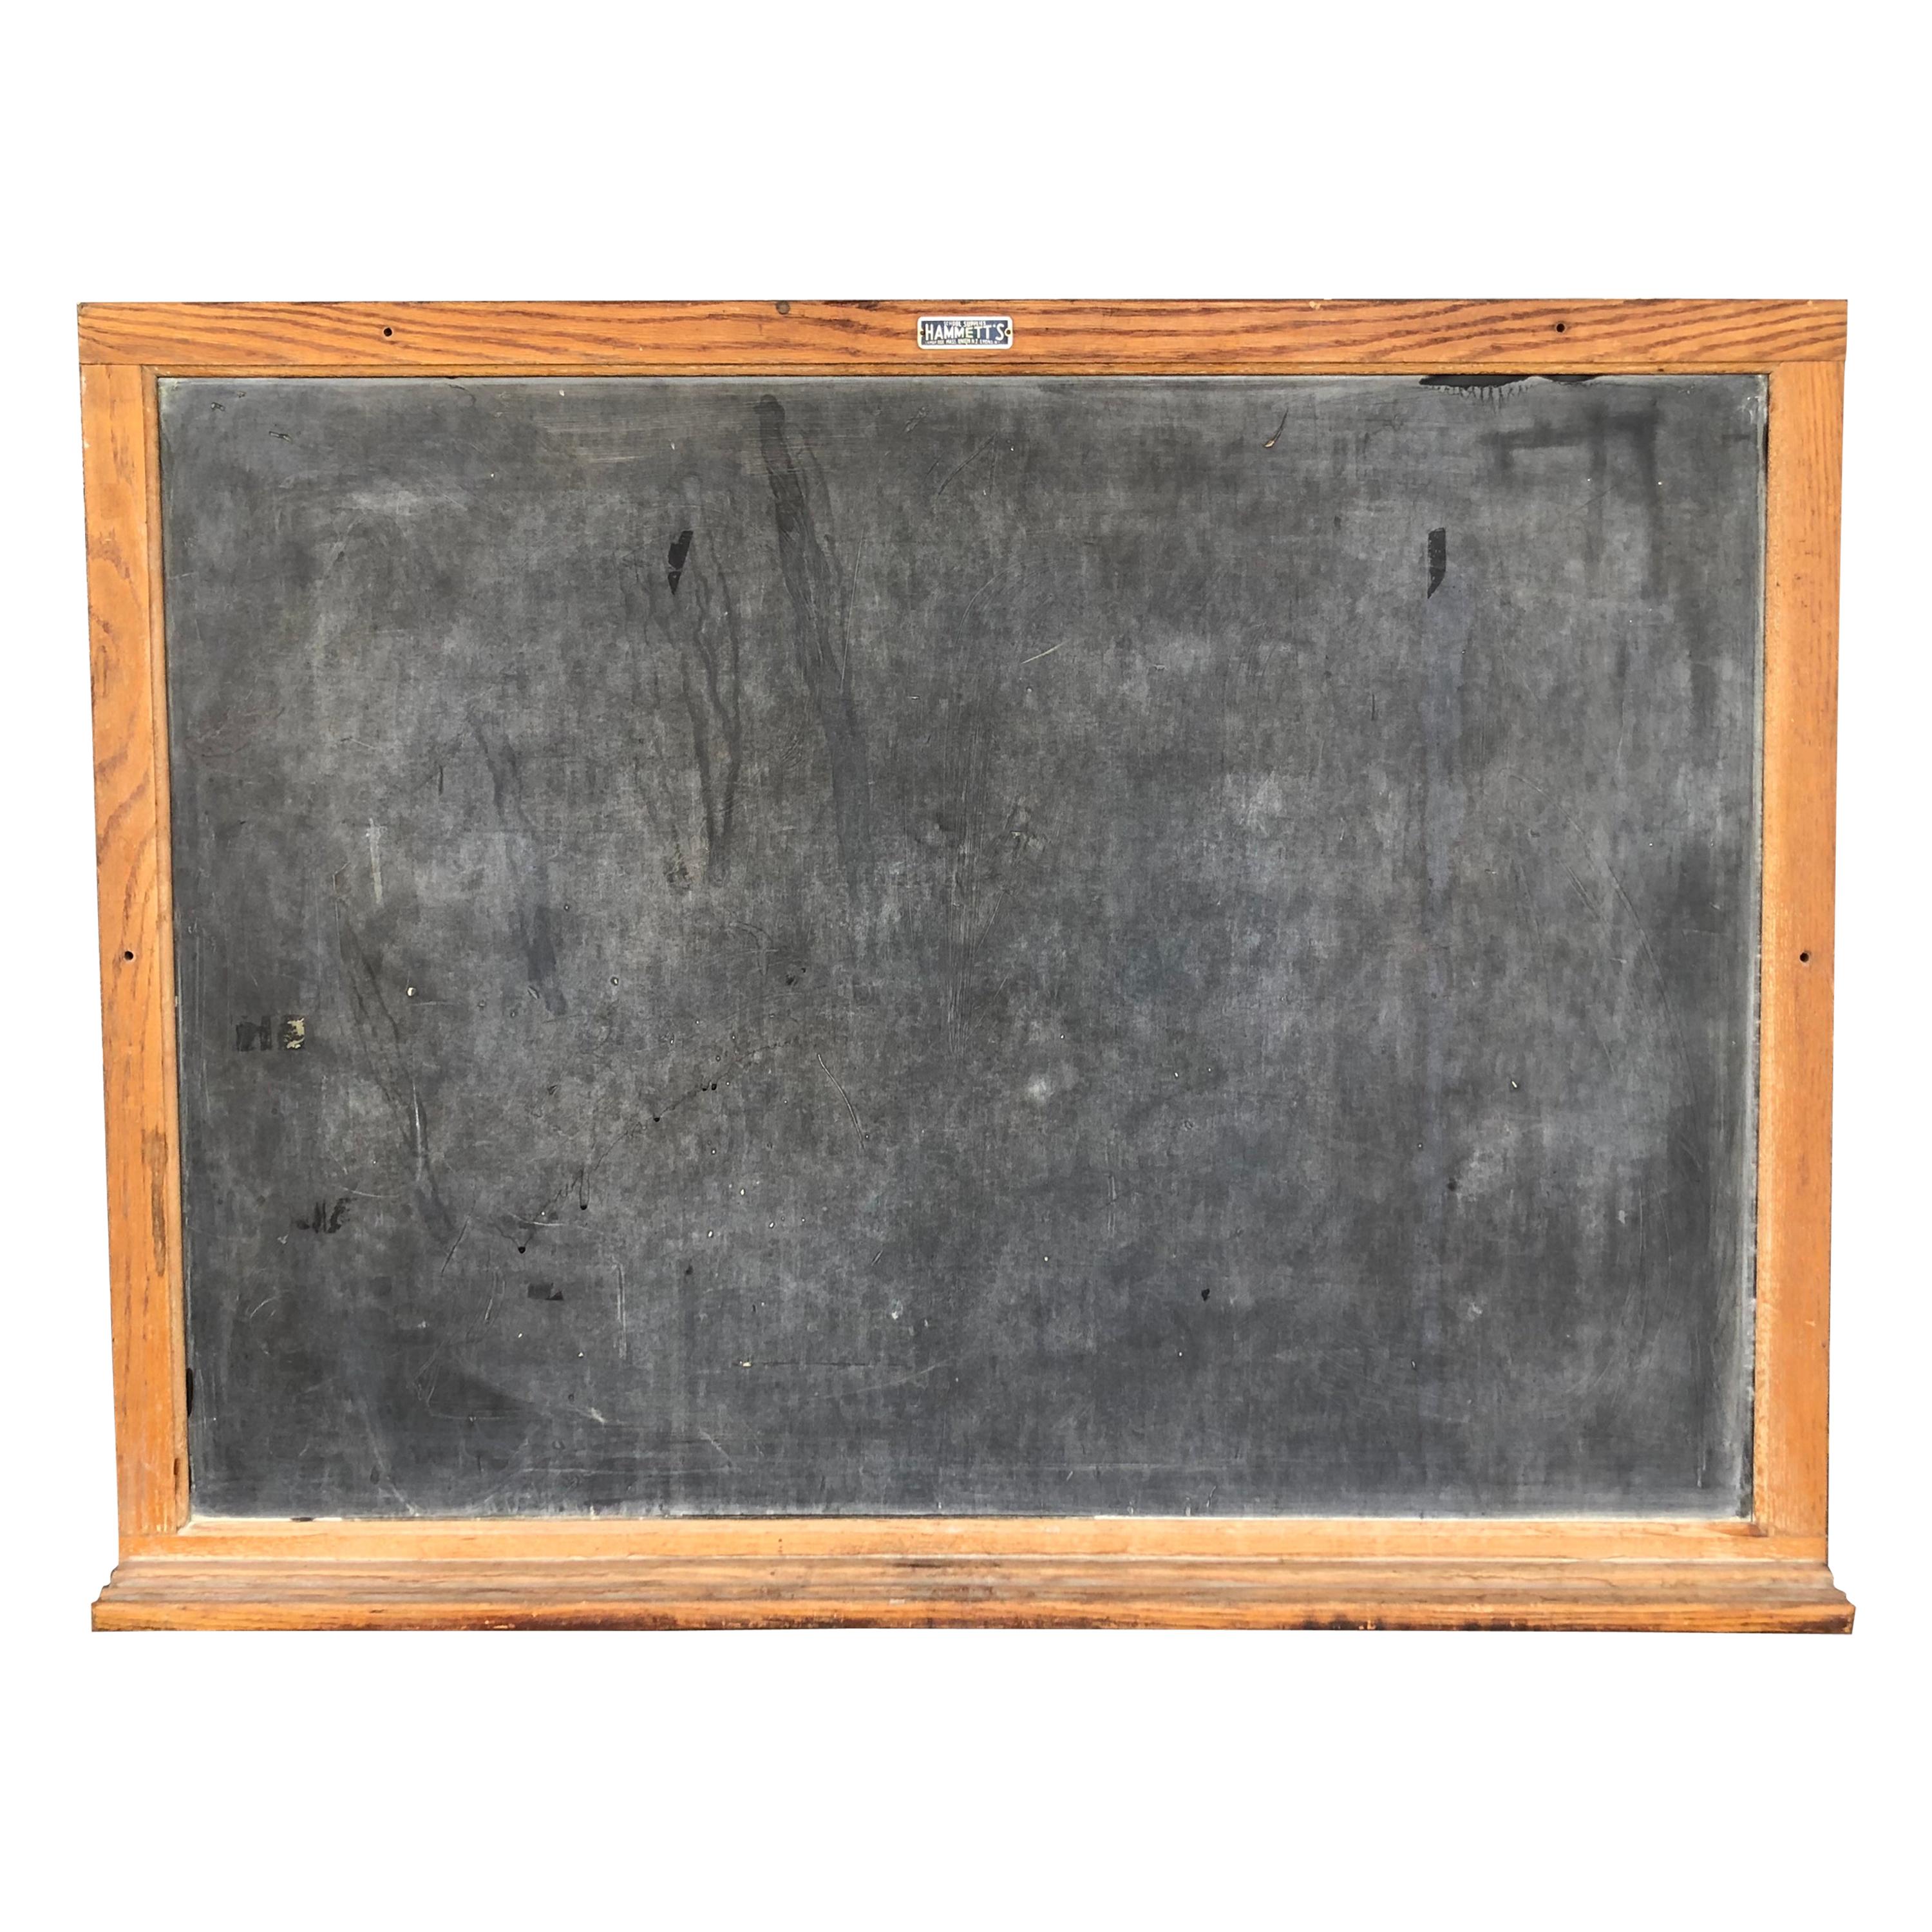 Rare 20th Century Antique Double Sided Chalkboard by Hammett’s School Supplies